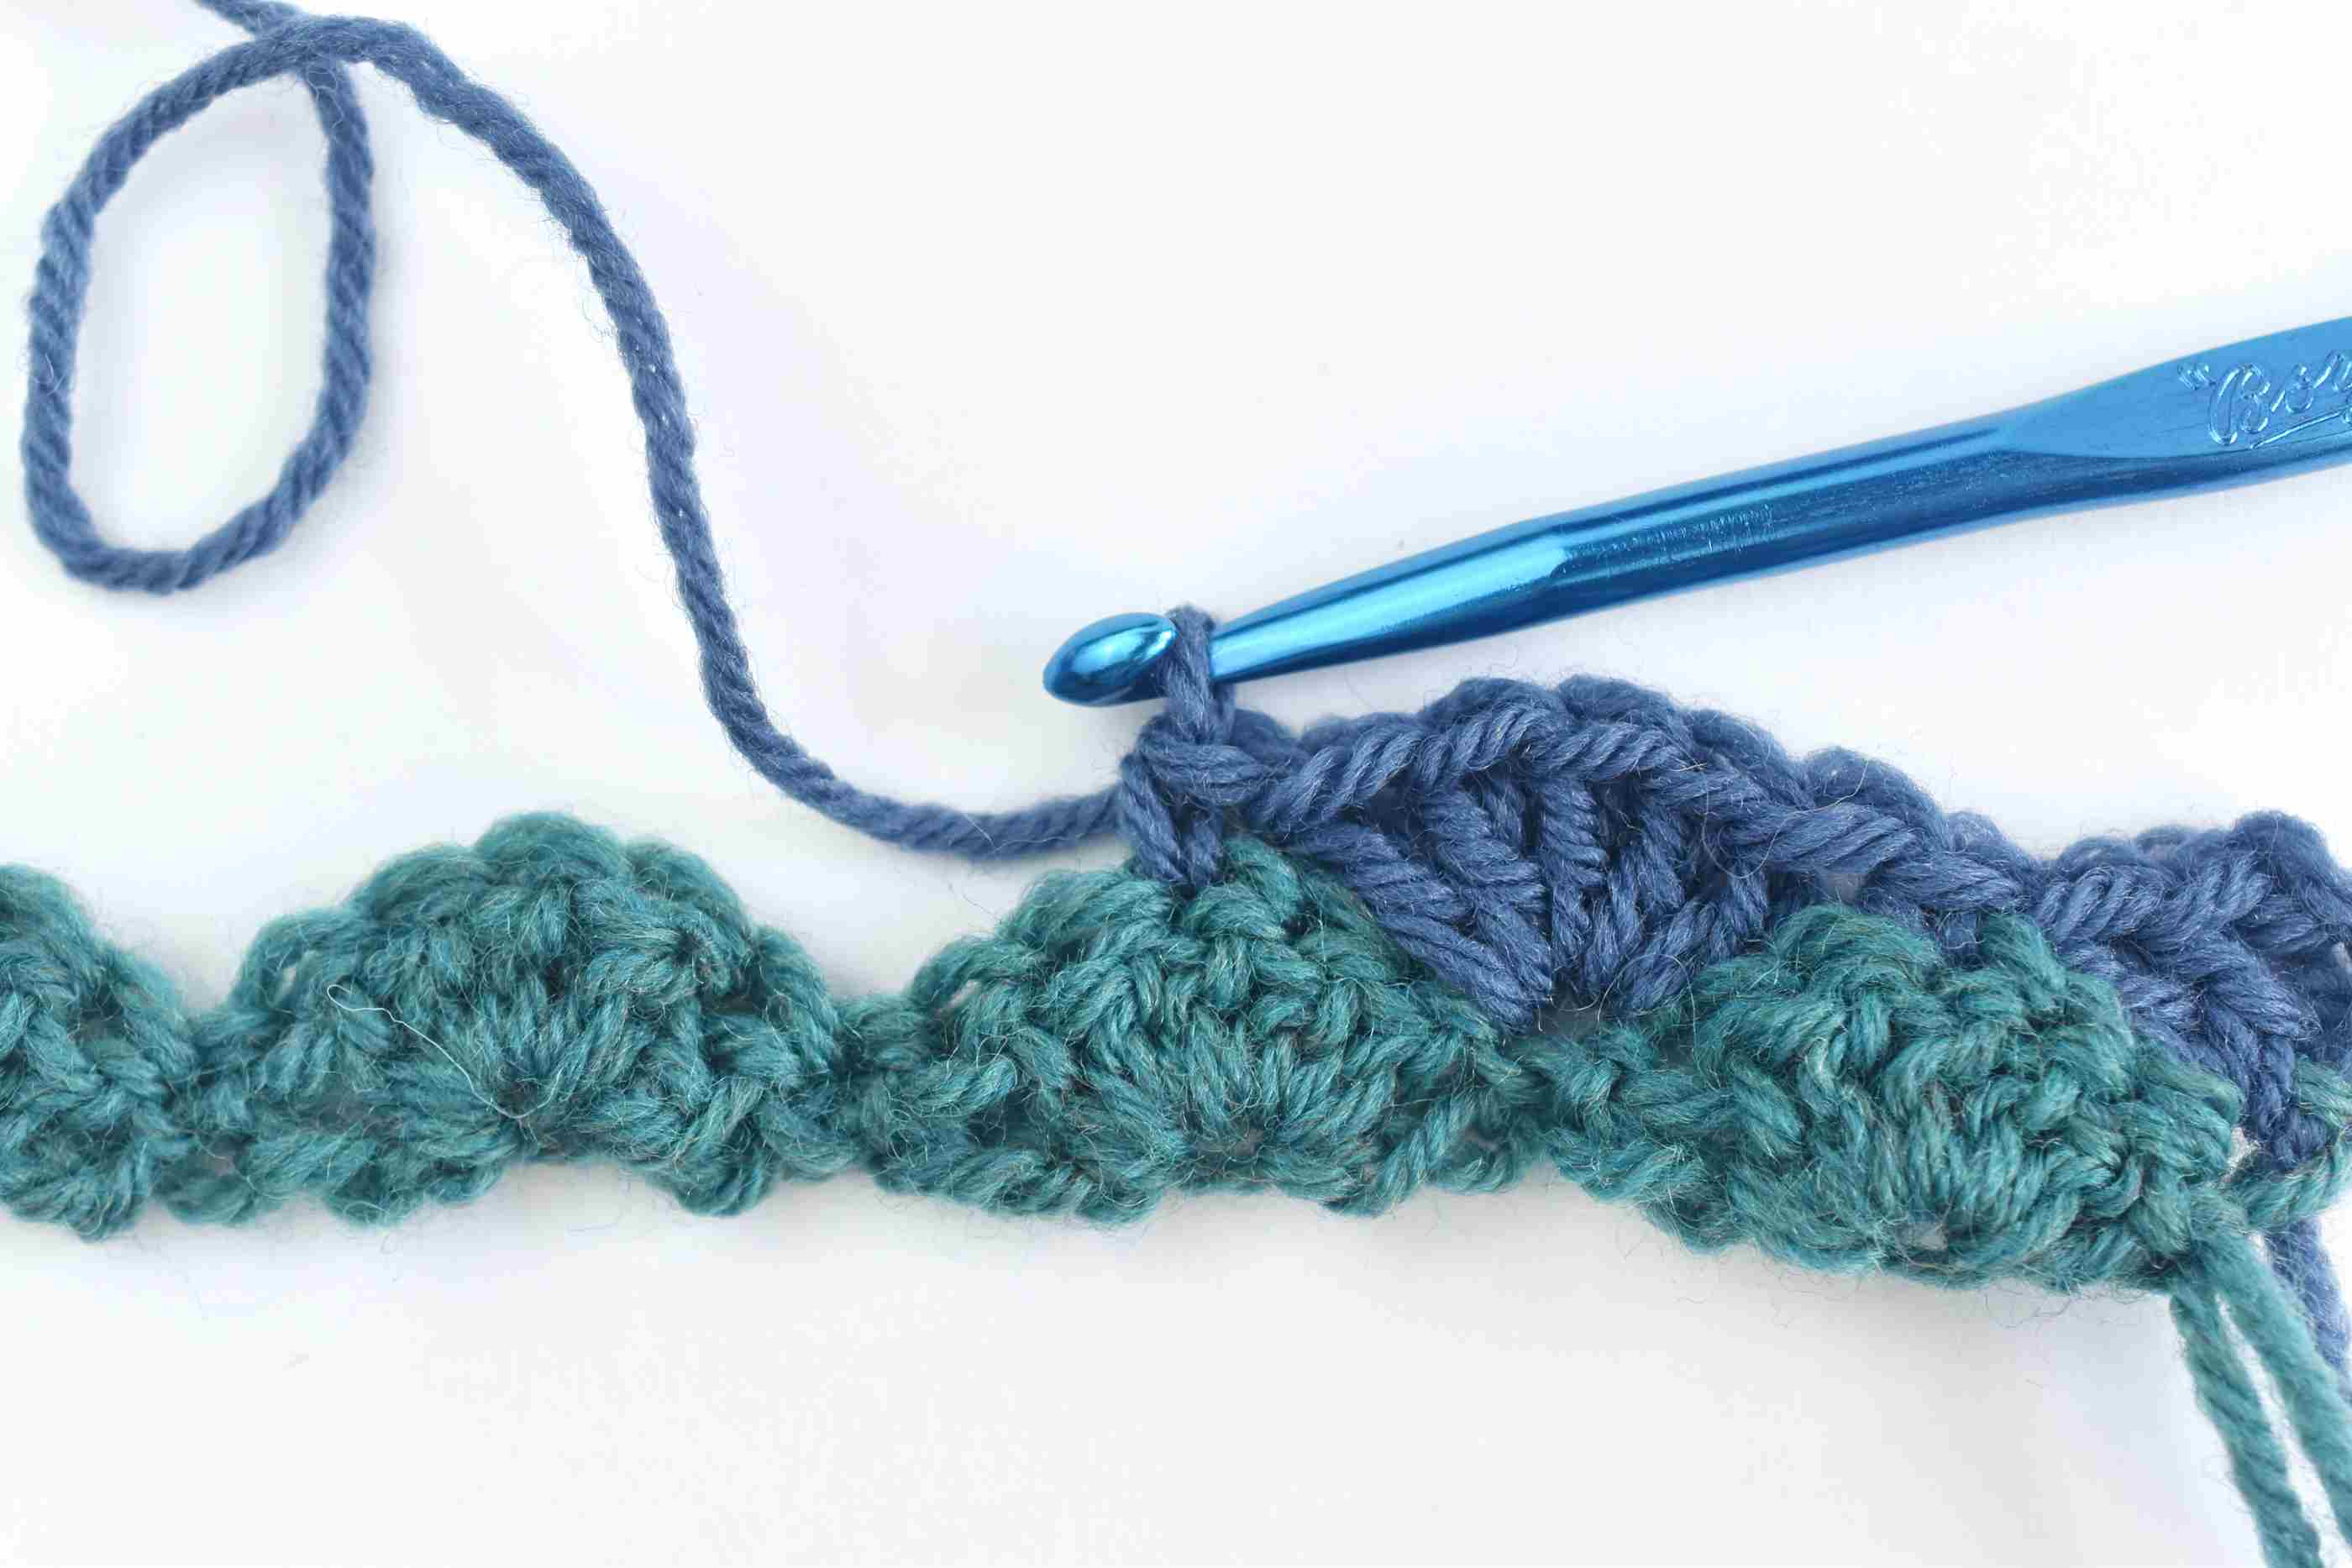 Shell Crochet Pattern How To Crochet Shell Stitch